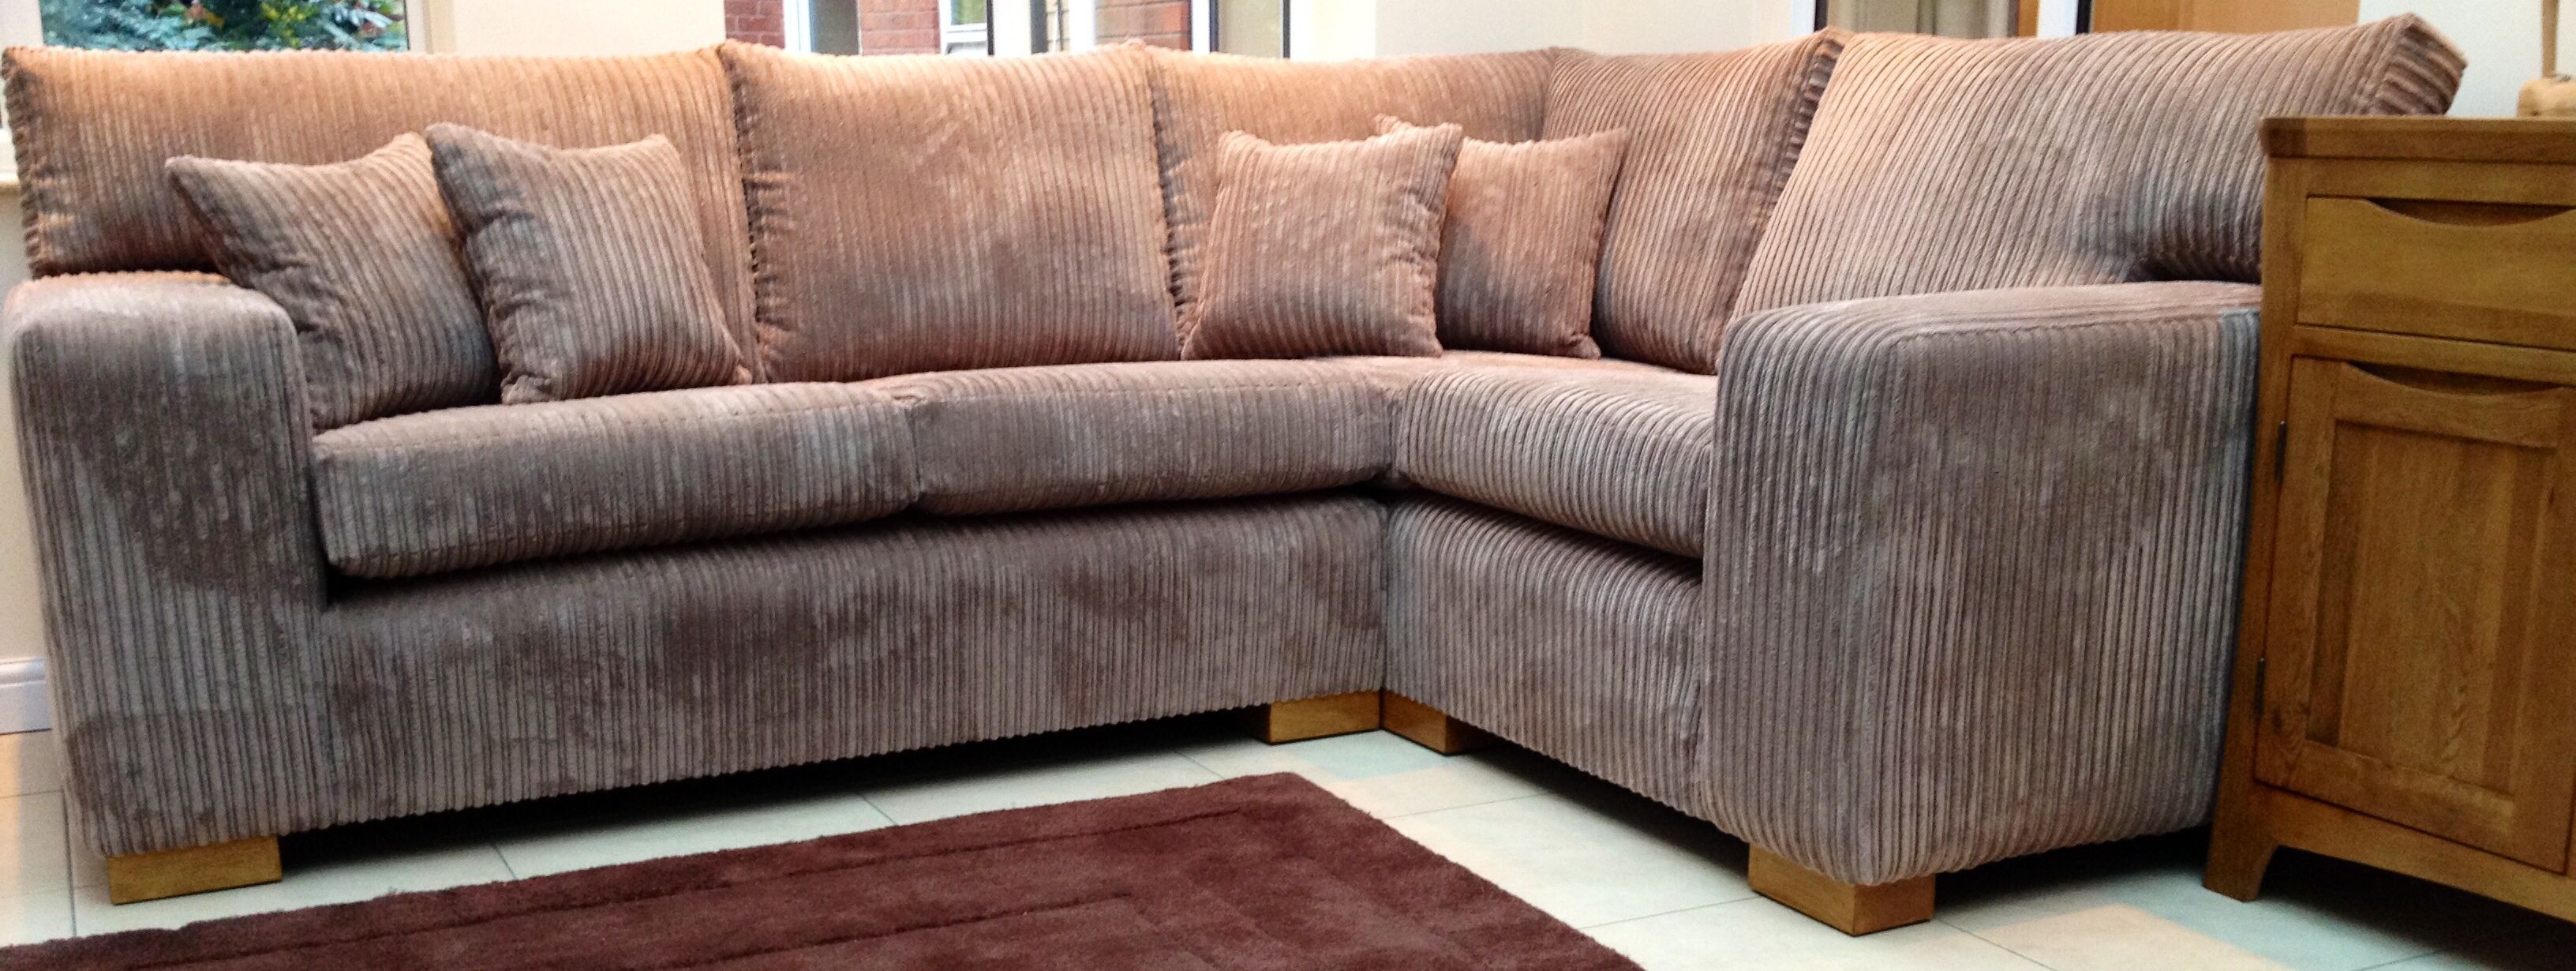 Bespoke Designs Ralvern Upholstery Bespoke Sofas Reupholstery Inside Bespoke Large Corner Sofas (View 4 of 15)